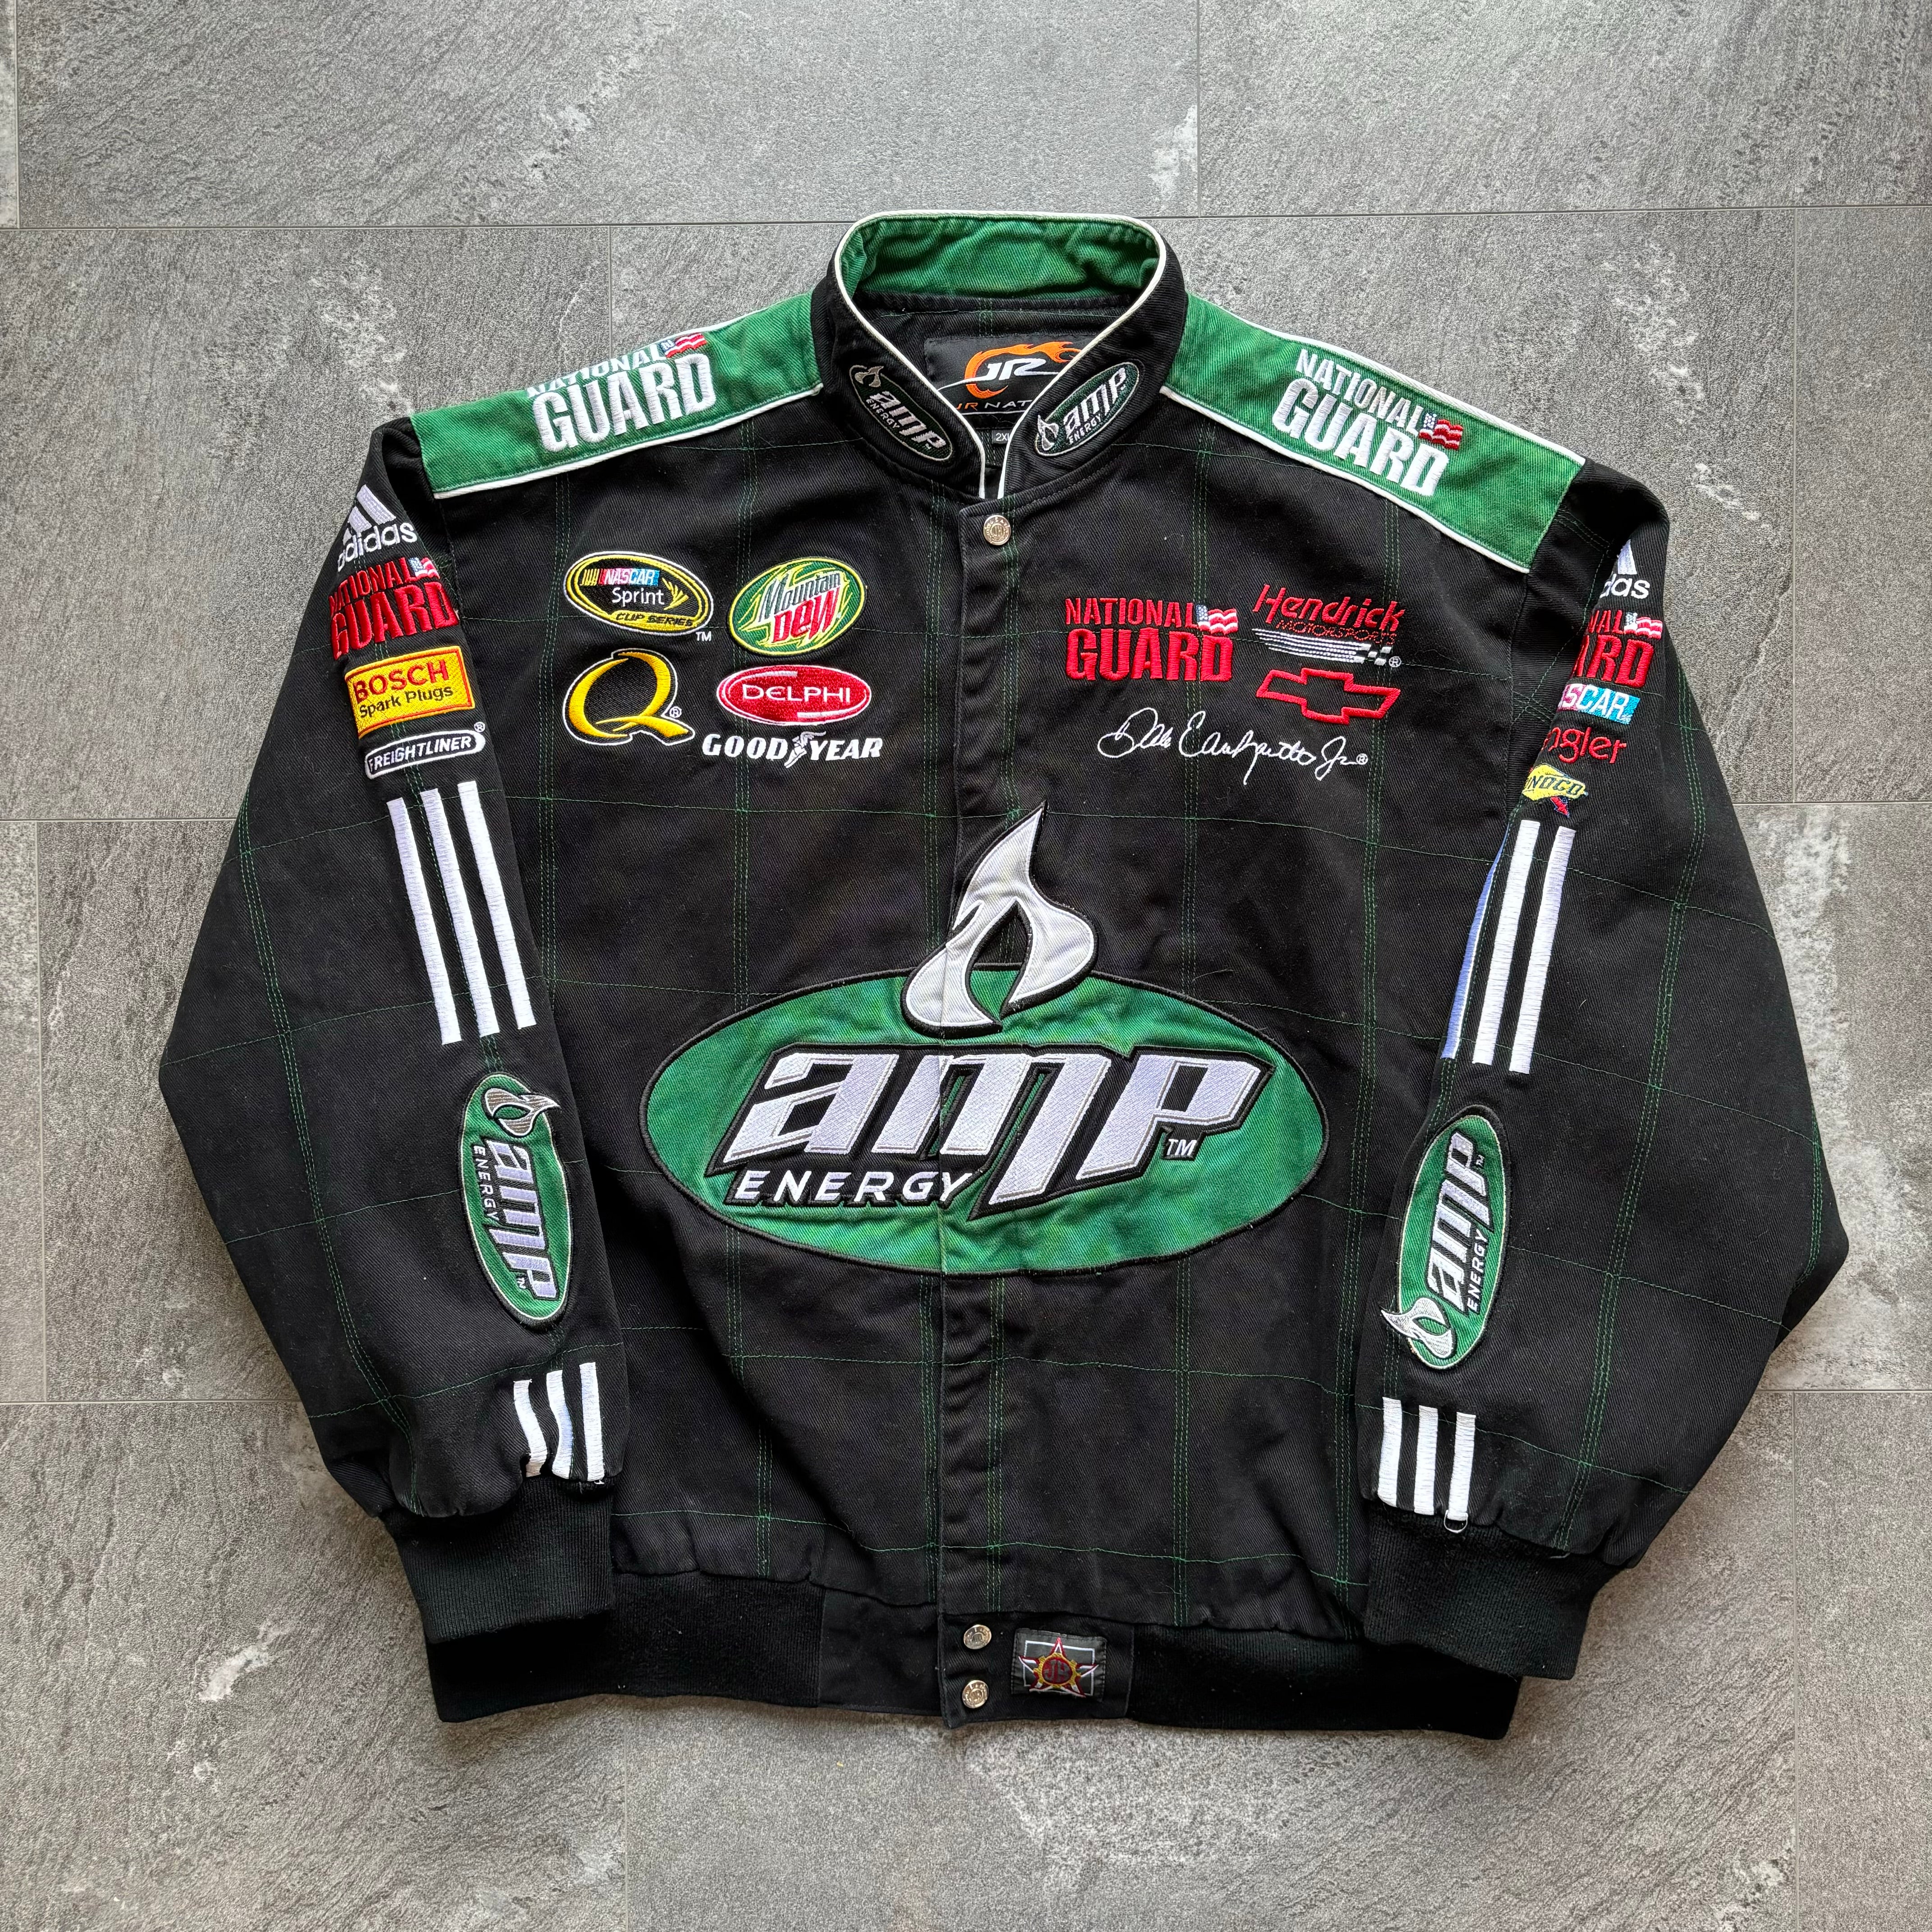 Amp Energy Nascar Racing jacket